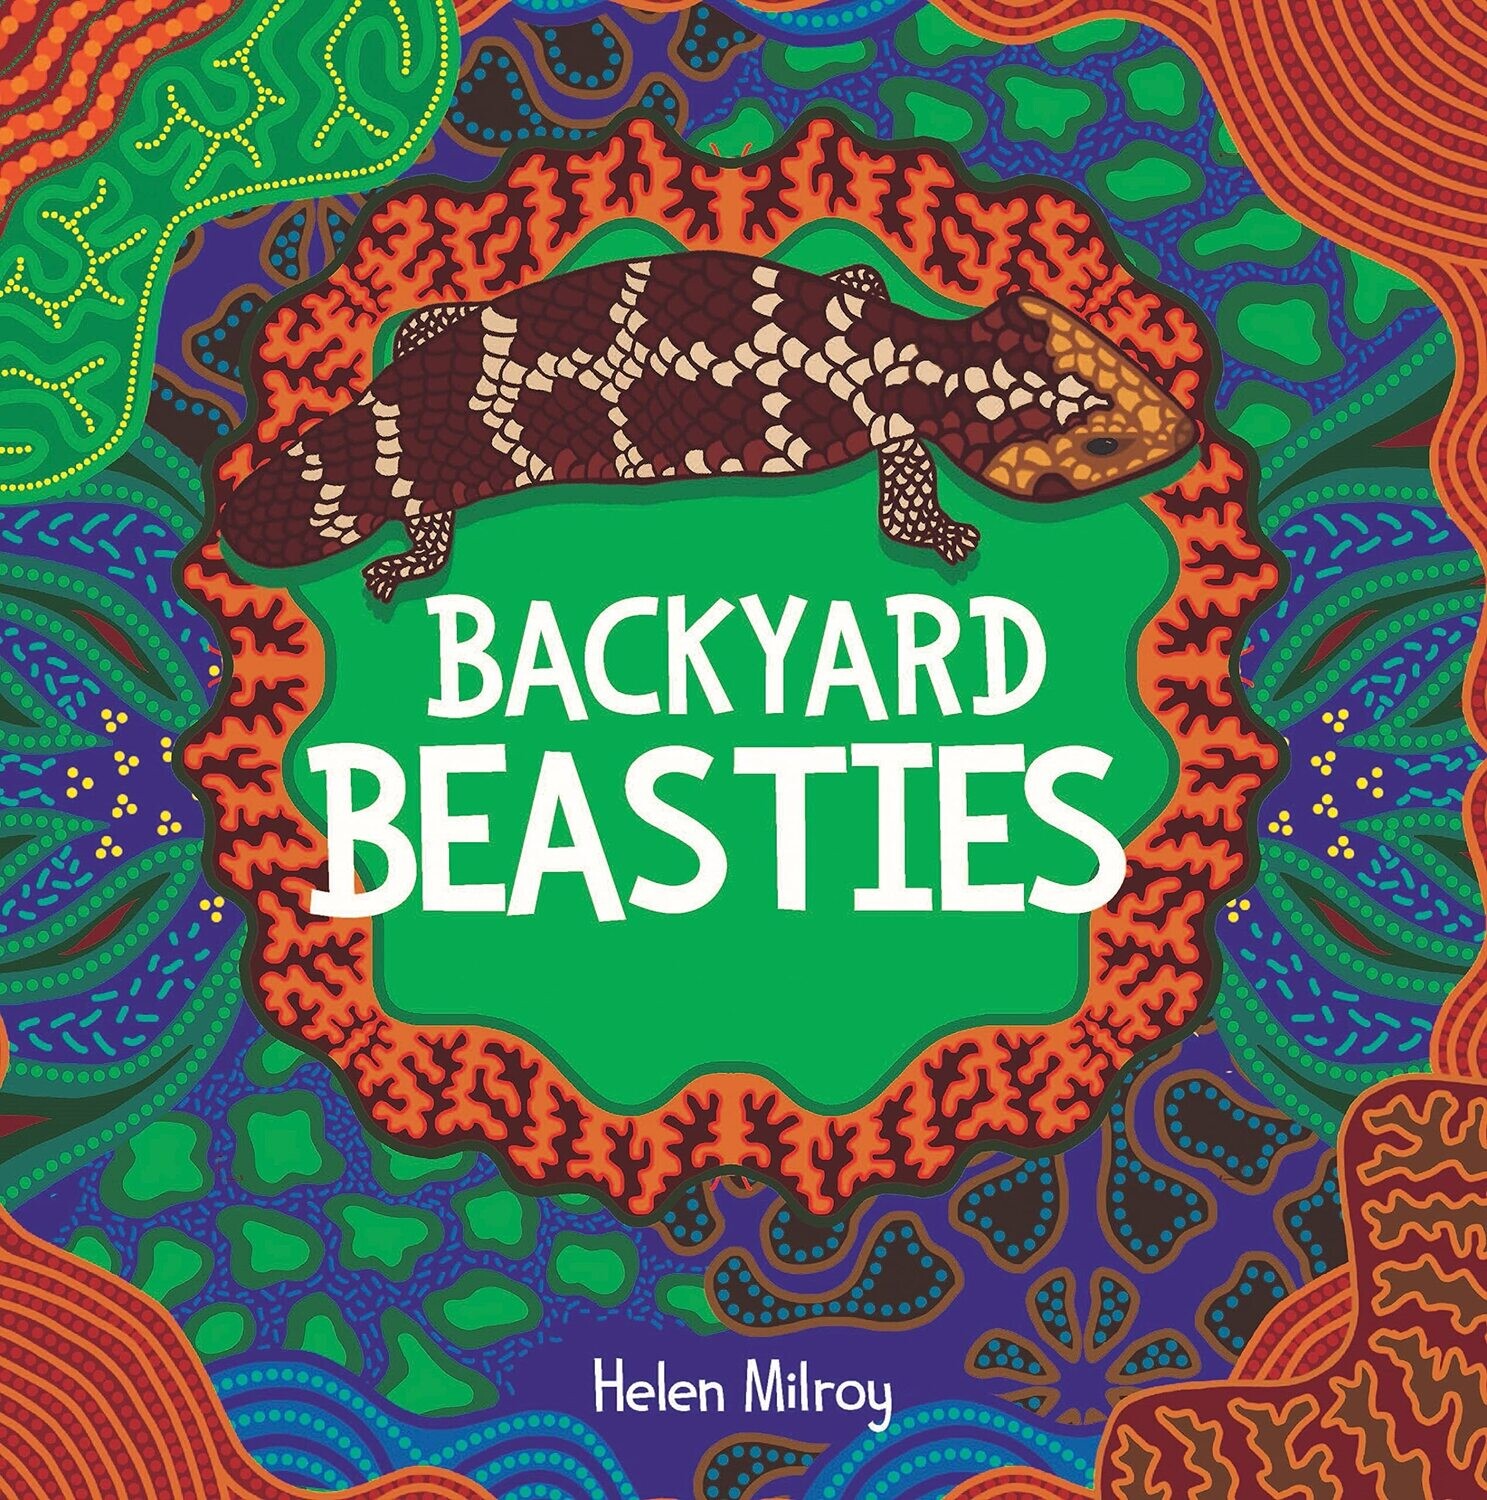 Backyard Beasties (HC) by Helen Milroy